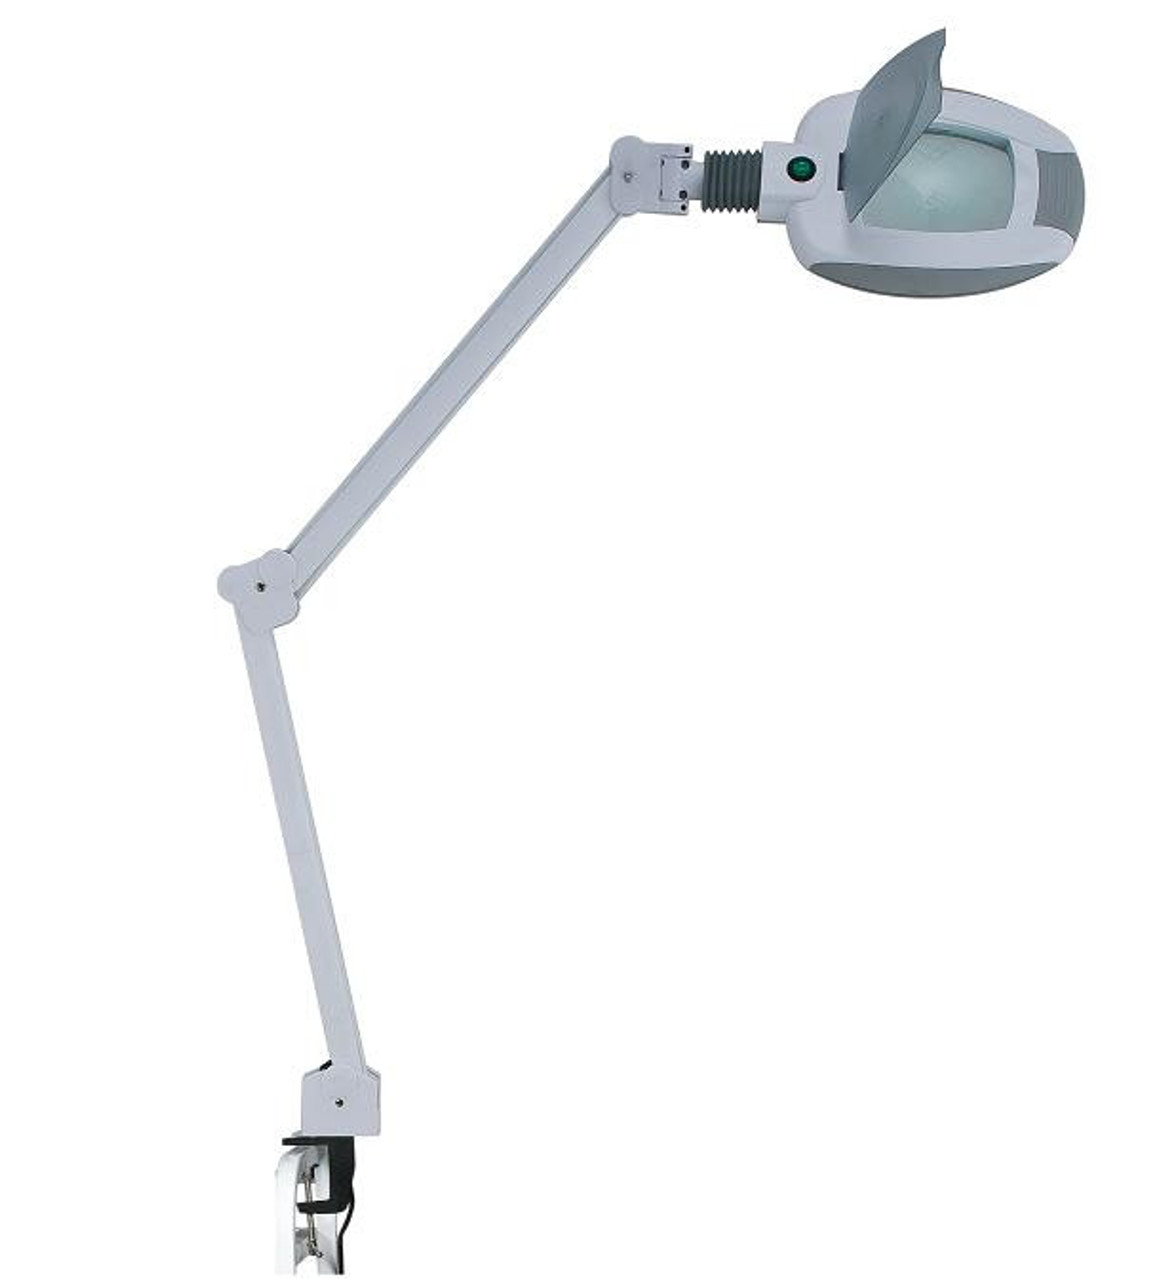 Tech Optics LED Floor Lamp w/2.5x Magnifier